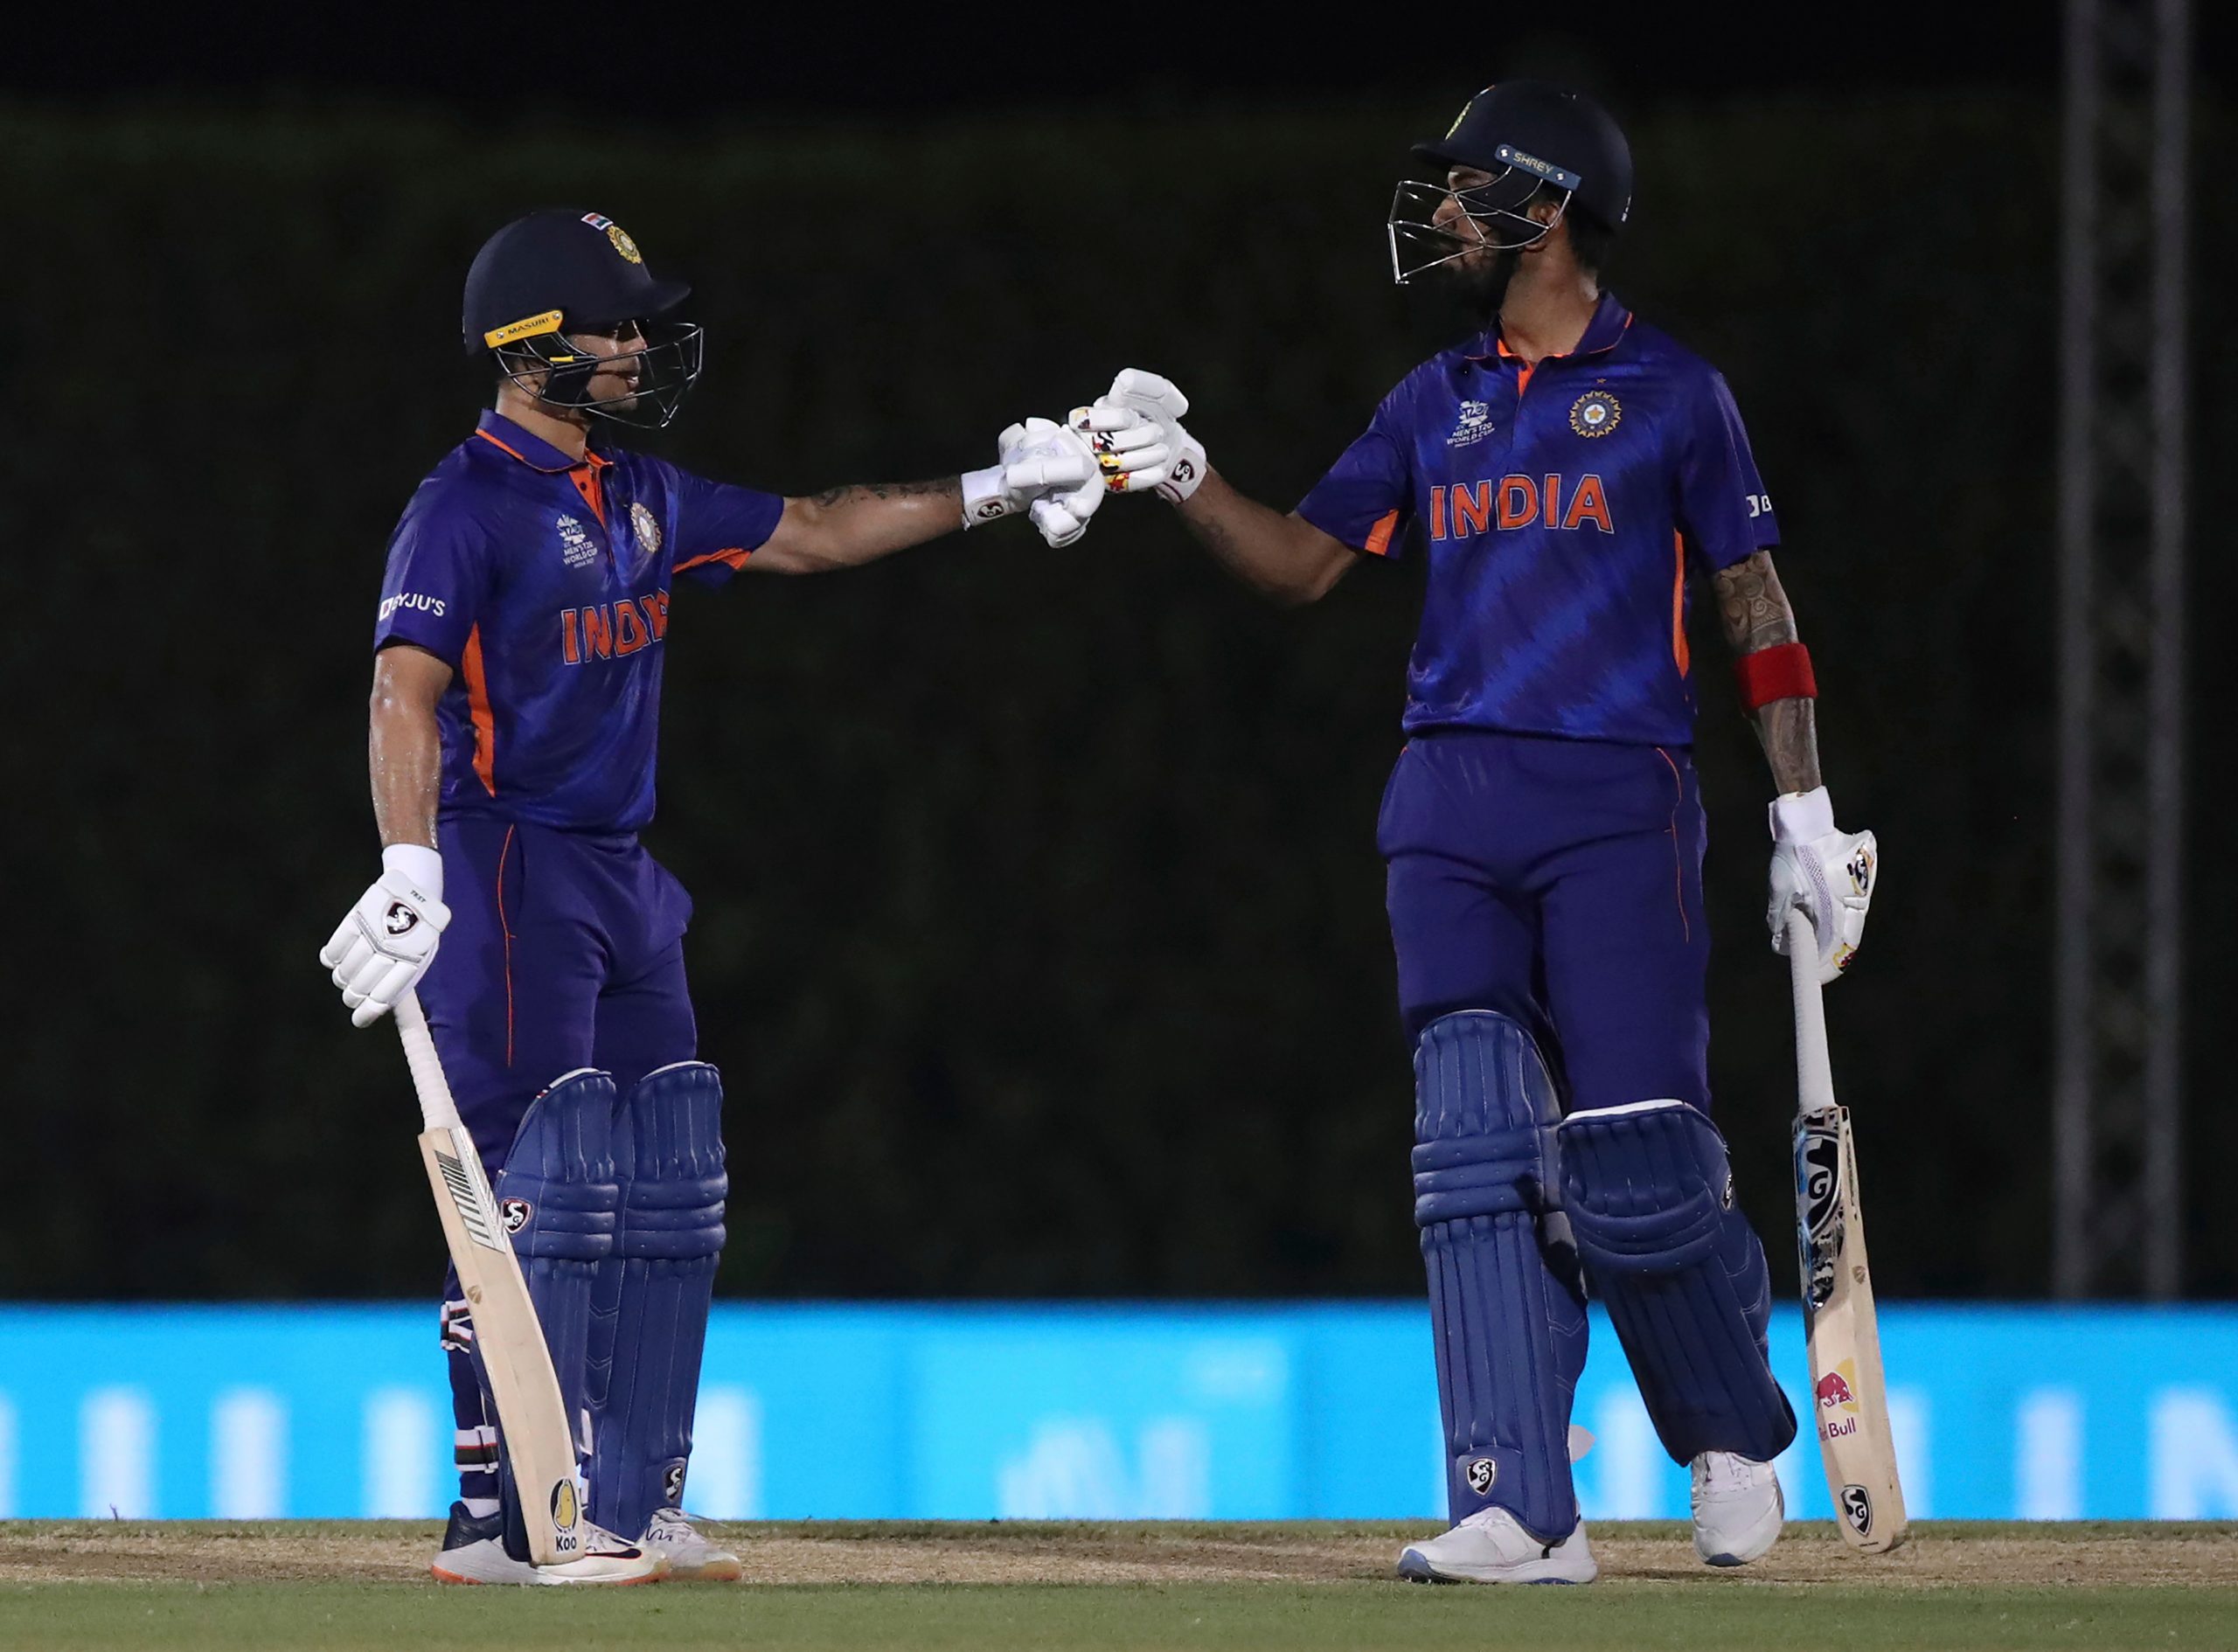 T20 World Cup: KL Rahul, Ishan Kishan hammer England in warm-up game